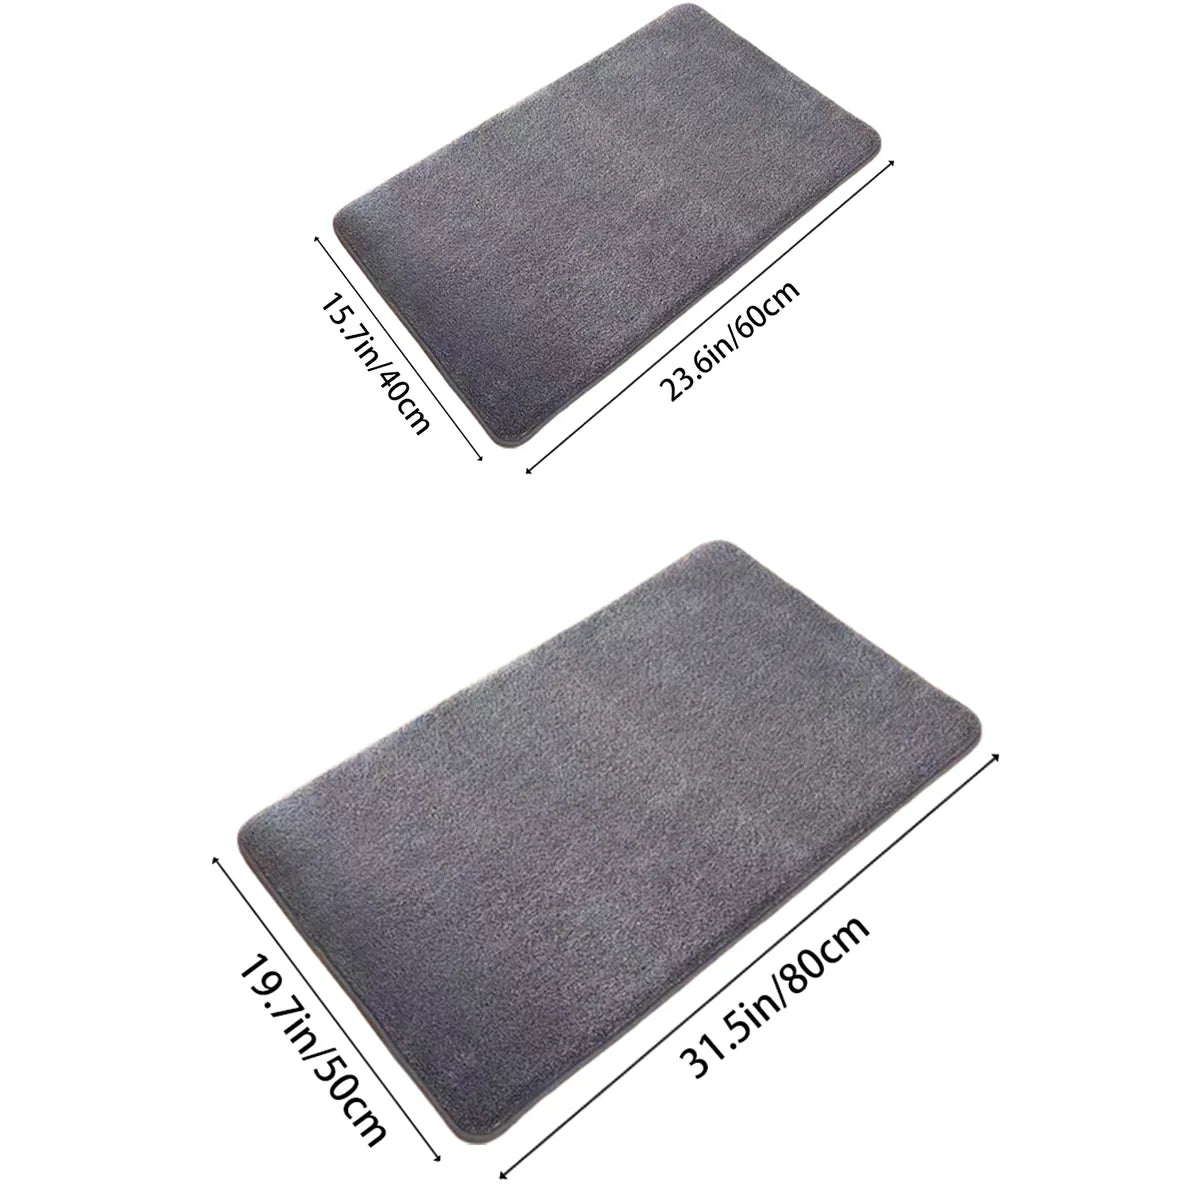 Super absorbent floor mat